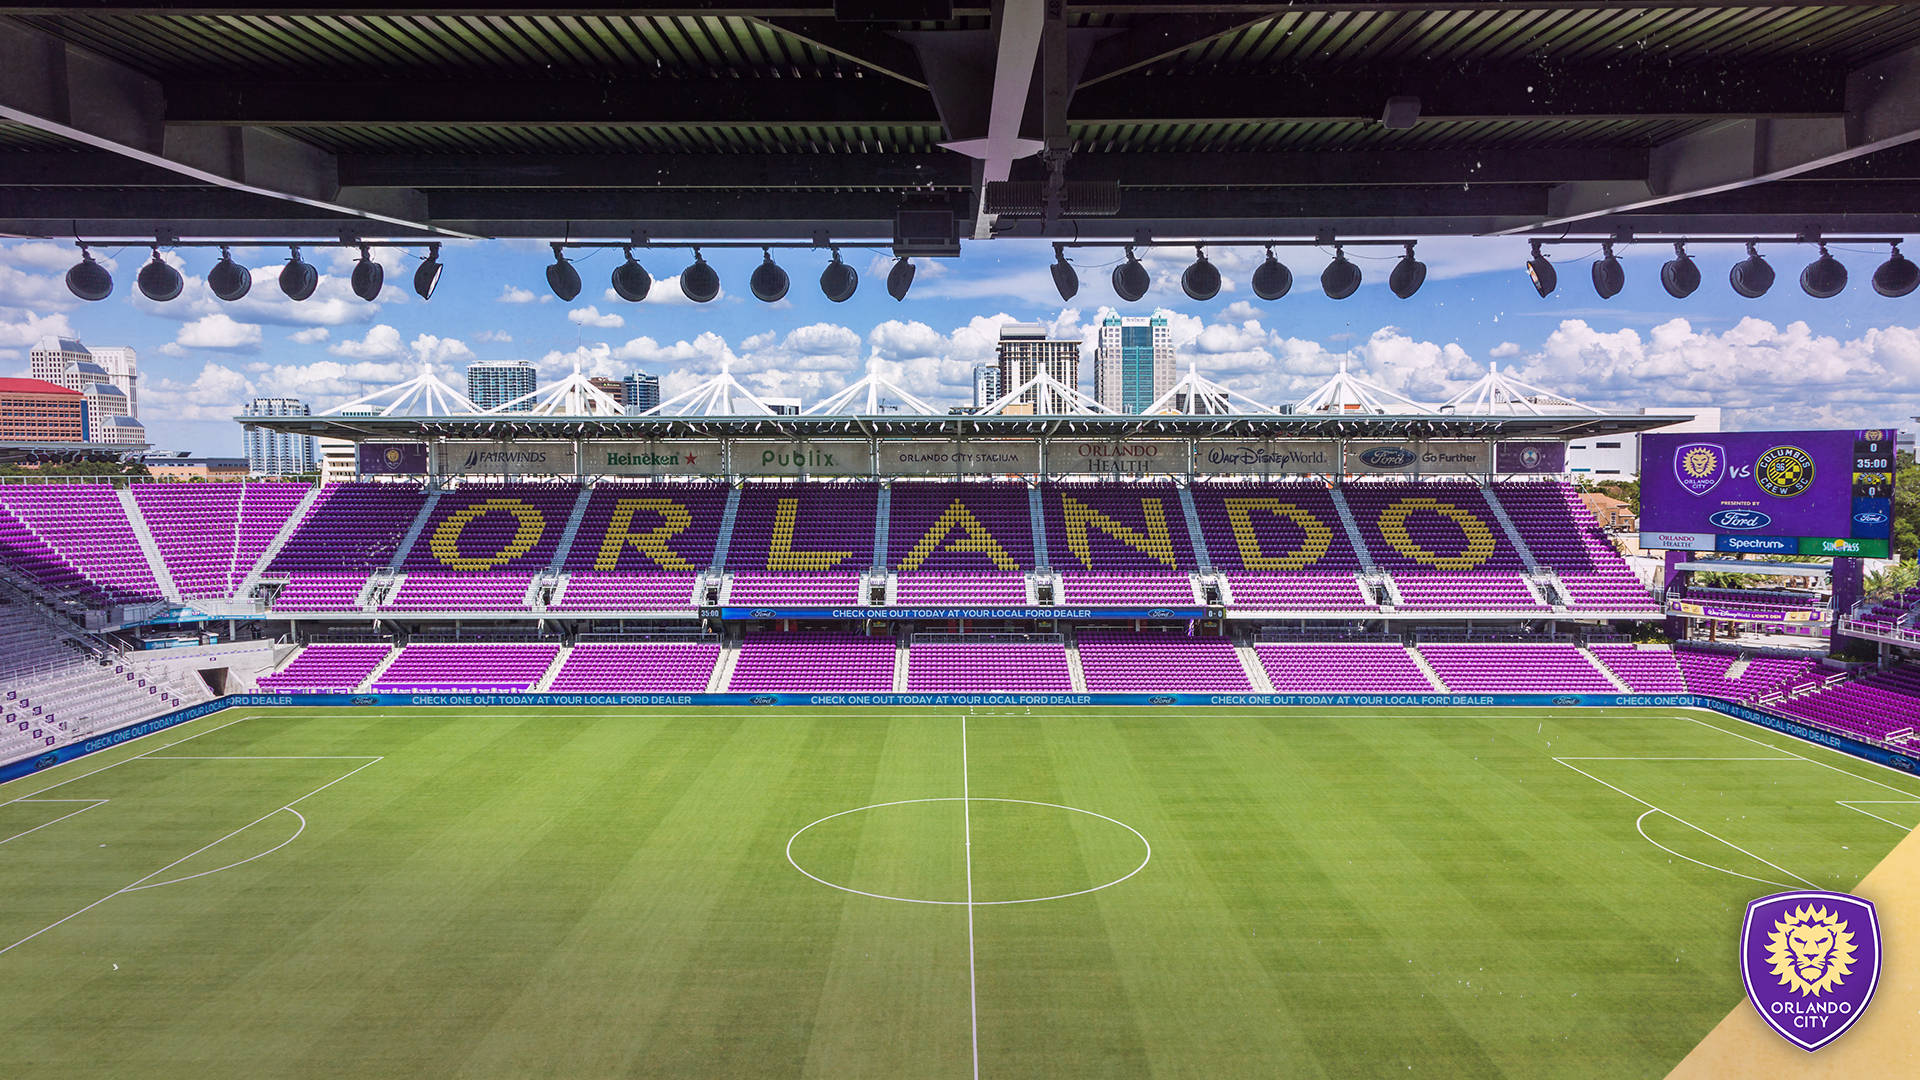 Top 999+ Orlando City Wallpaper Full HD, 4K✅Free to Use